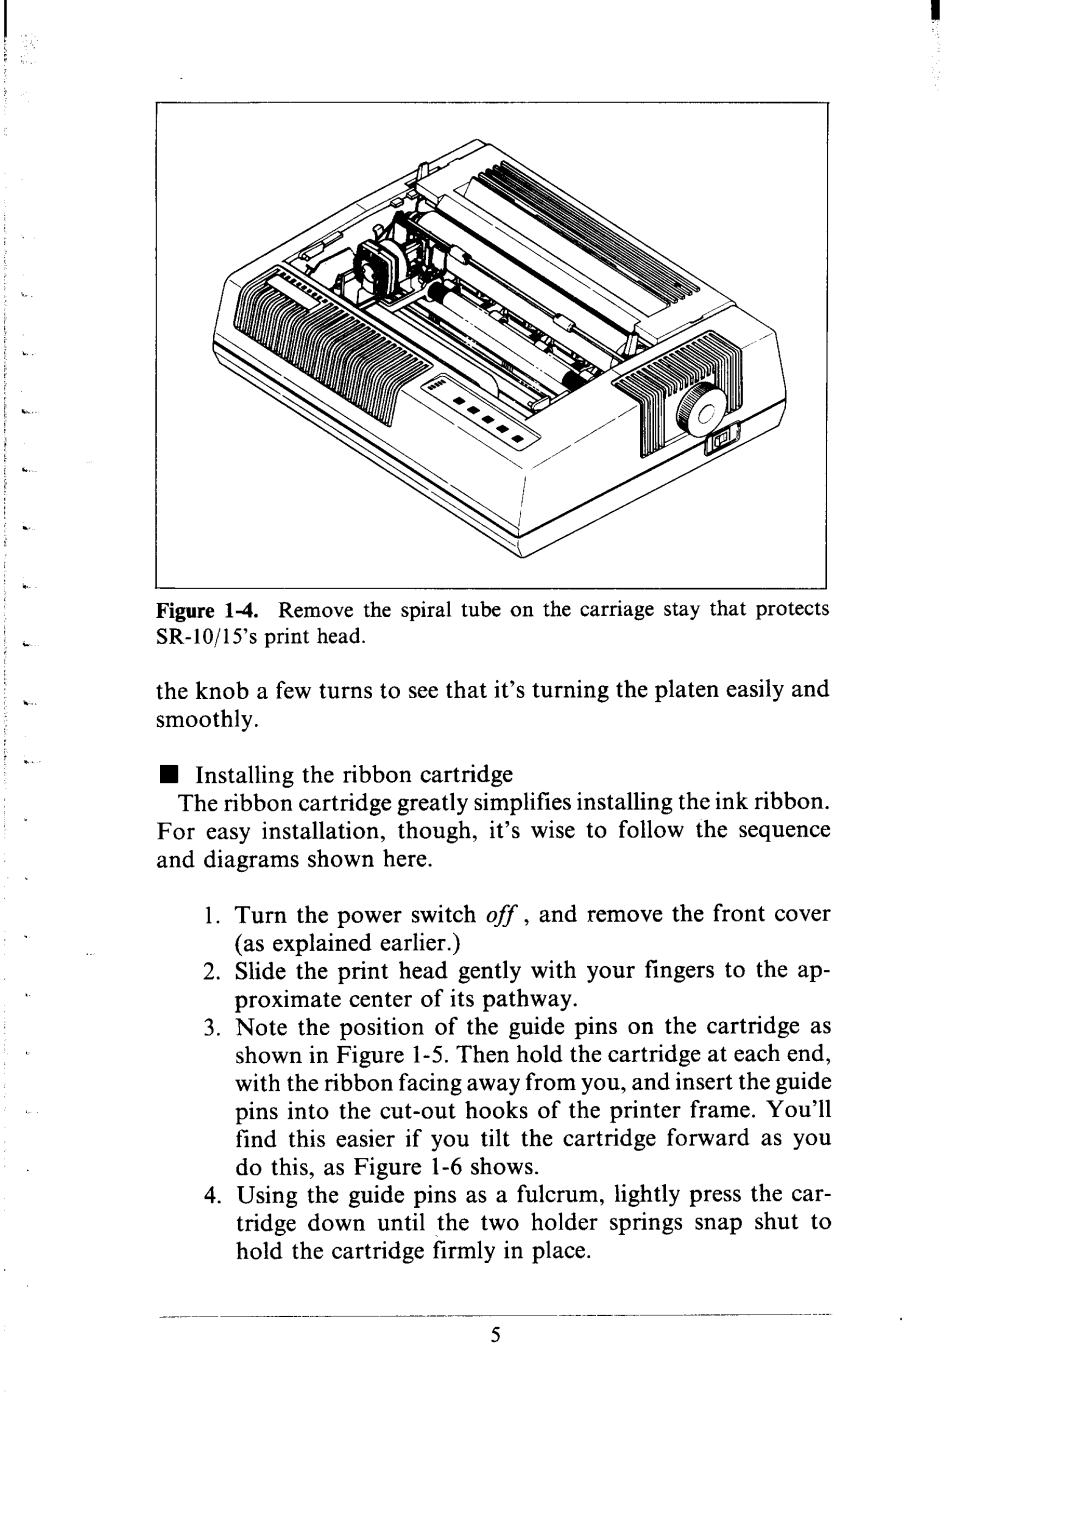 Star Micronics SR-10/I5 user manual n Installing the ribbon cartridge 